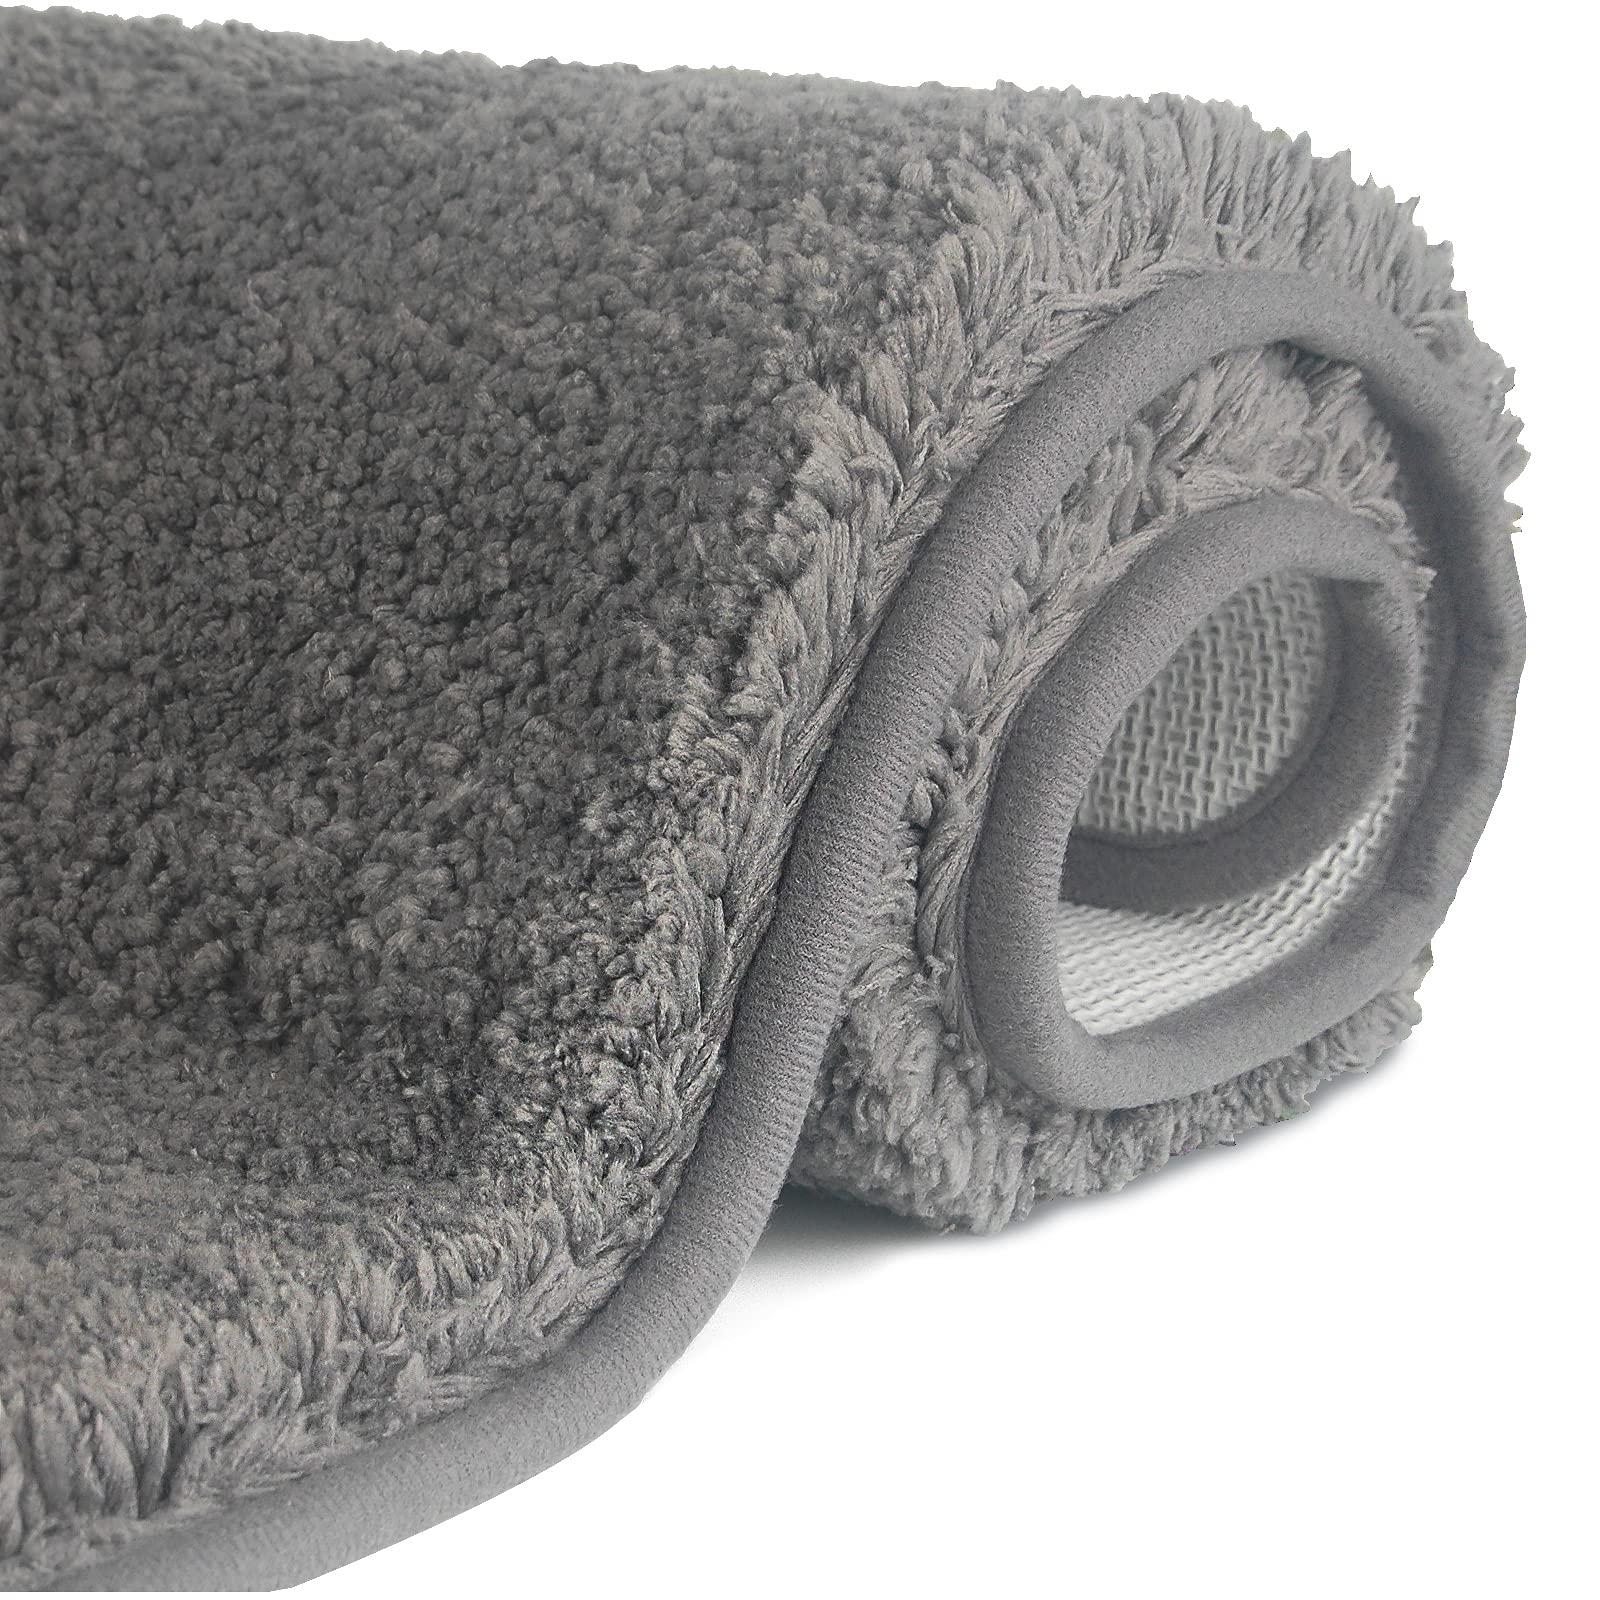 FCSDETAIL Non-slip Bath Mat 80 x 150 cm, Quick Dry Absorbent Bathroom Rug, Machine Washable Soft Microfiber Carpet for Tub, Shower, Floor, Dark Gray